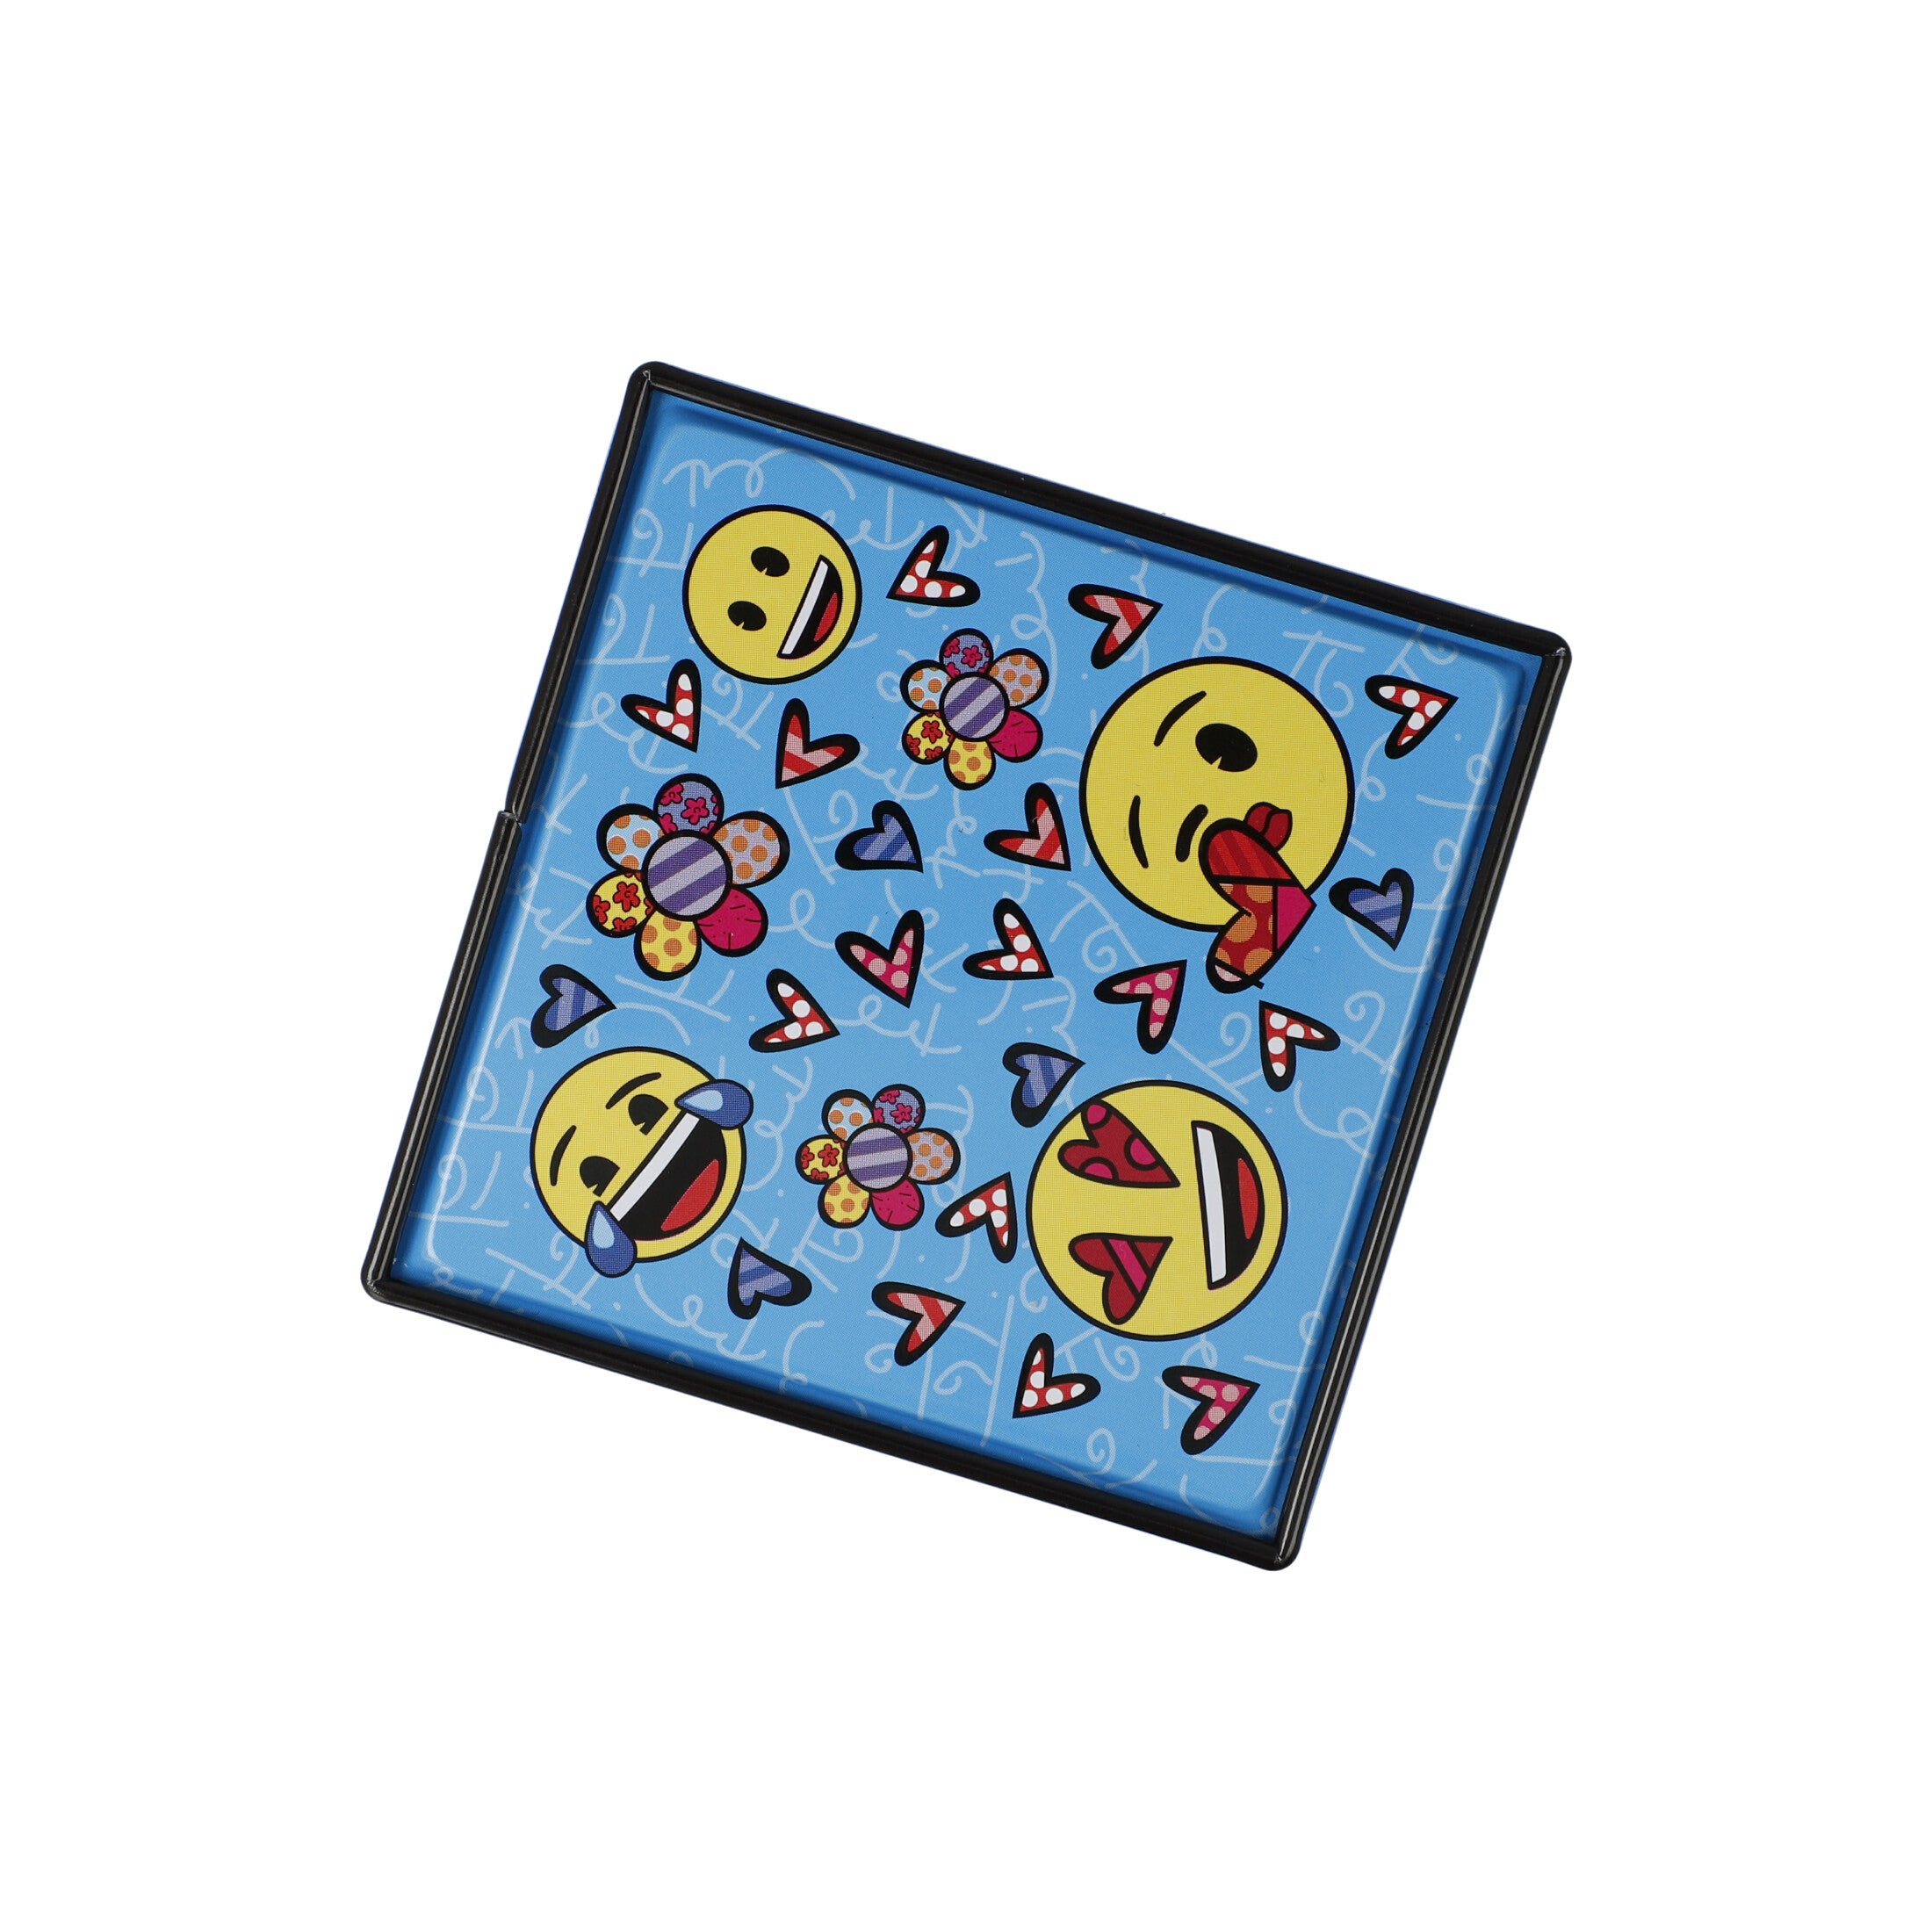 Goebel - Pop Art Britto Emojis Teedose - Always Happy